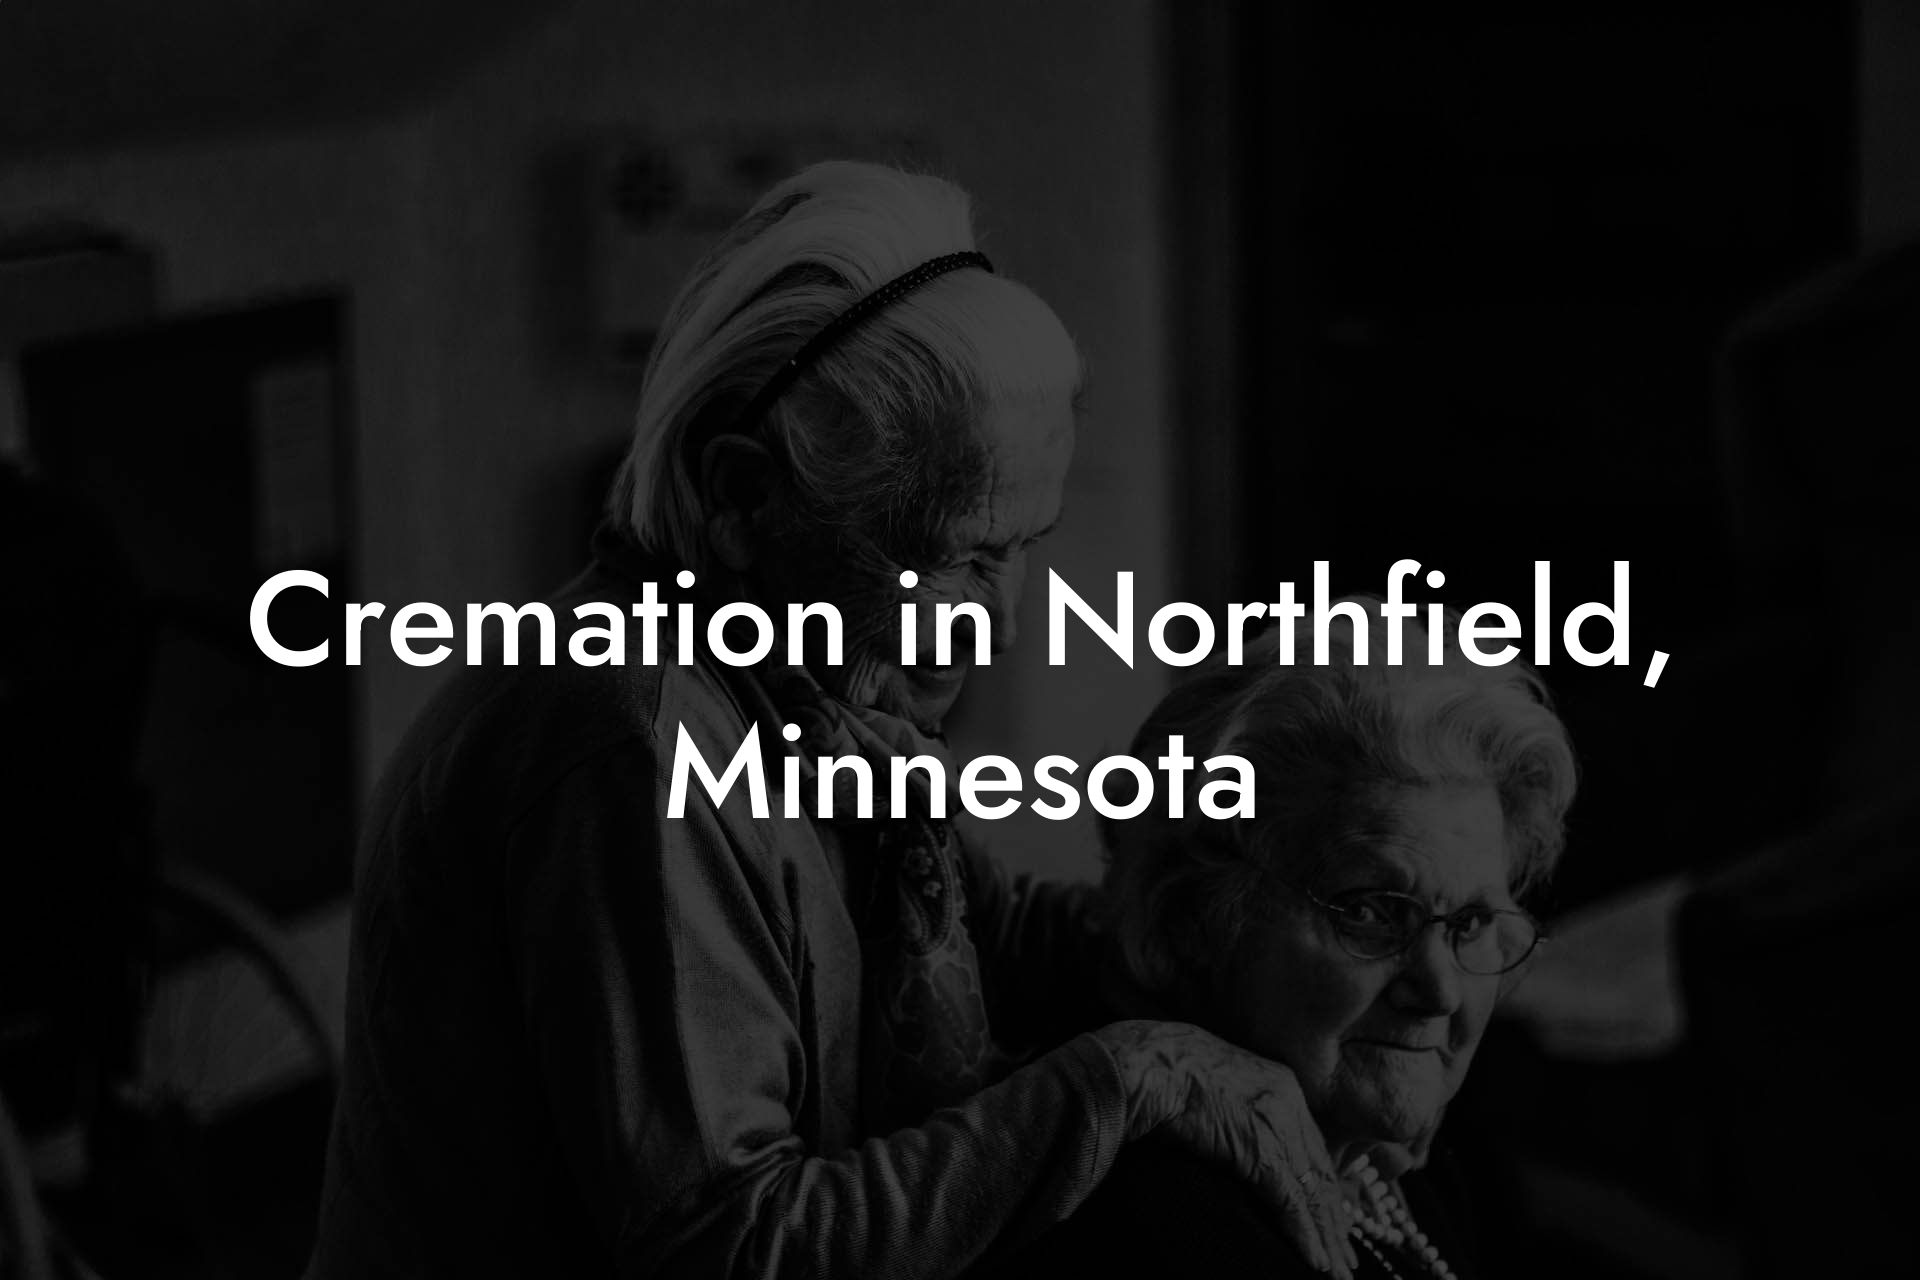 Cremation in Northfield, Minnesota